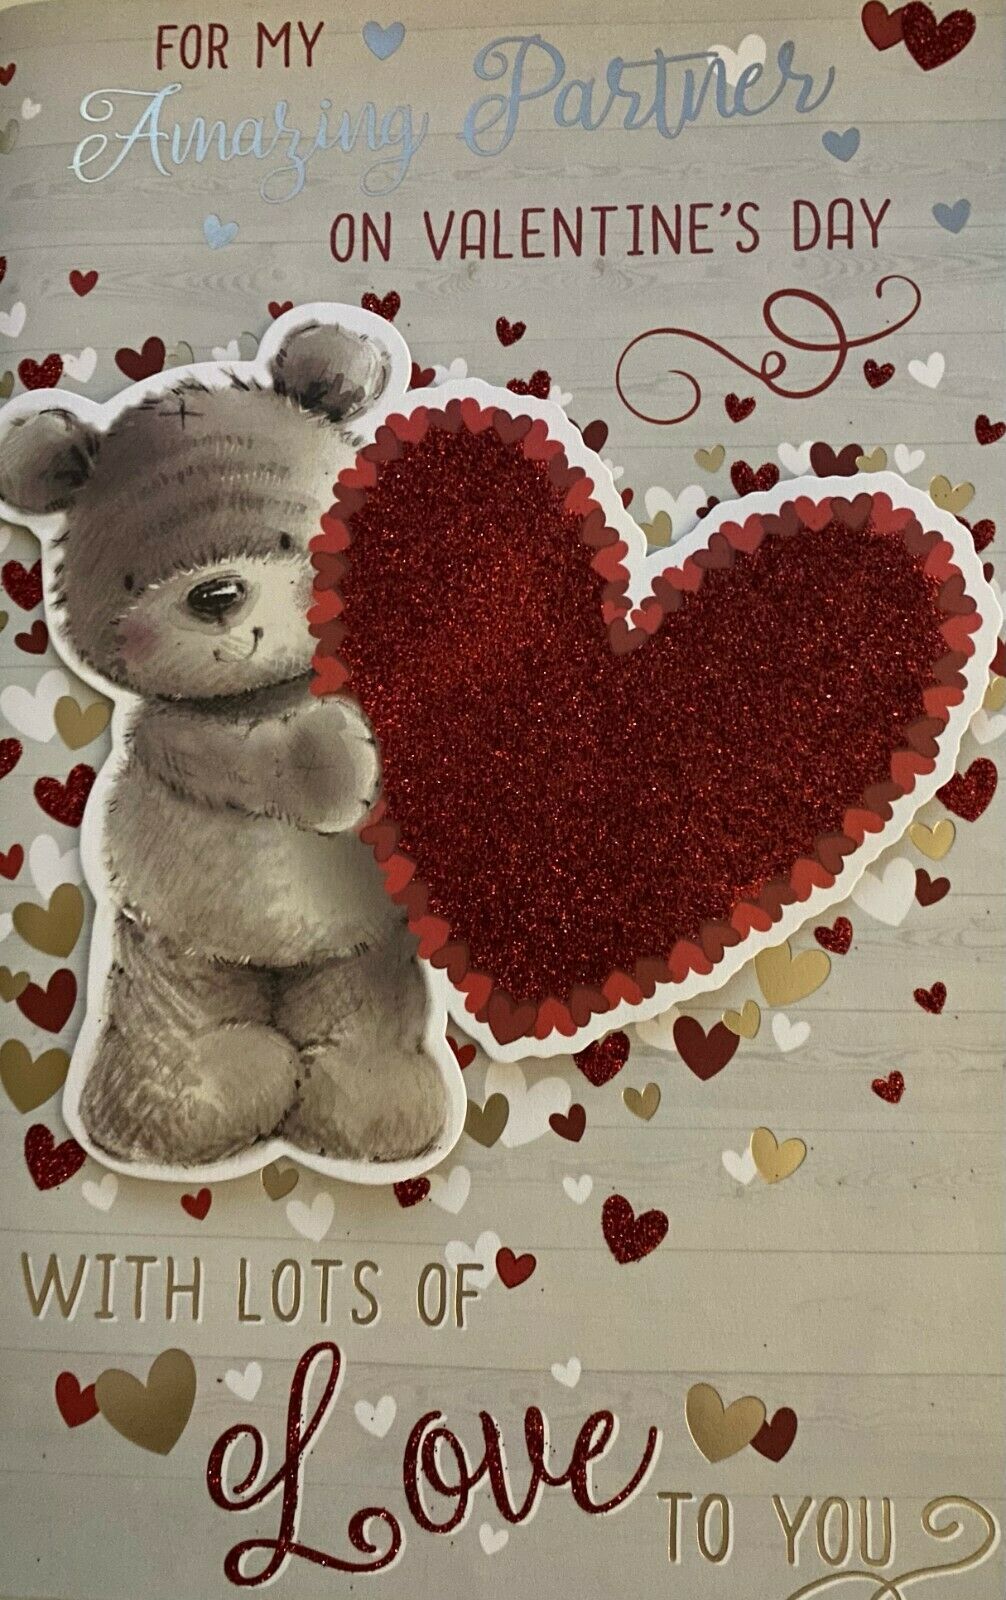 Valentine's Day Card For My Amazing Partner On Valentine's Day - Teddy Hear